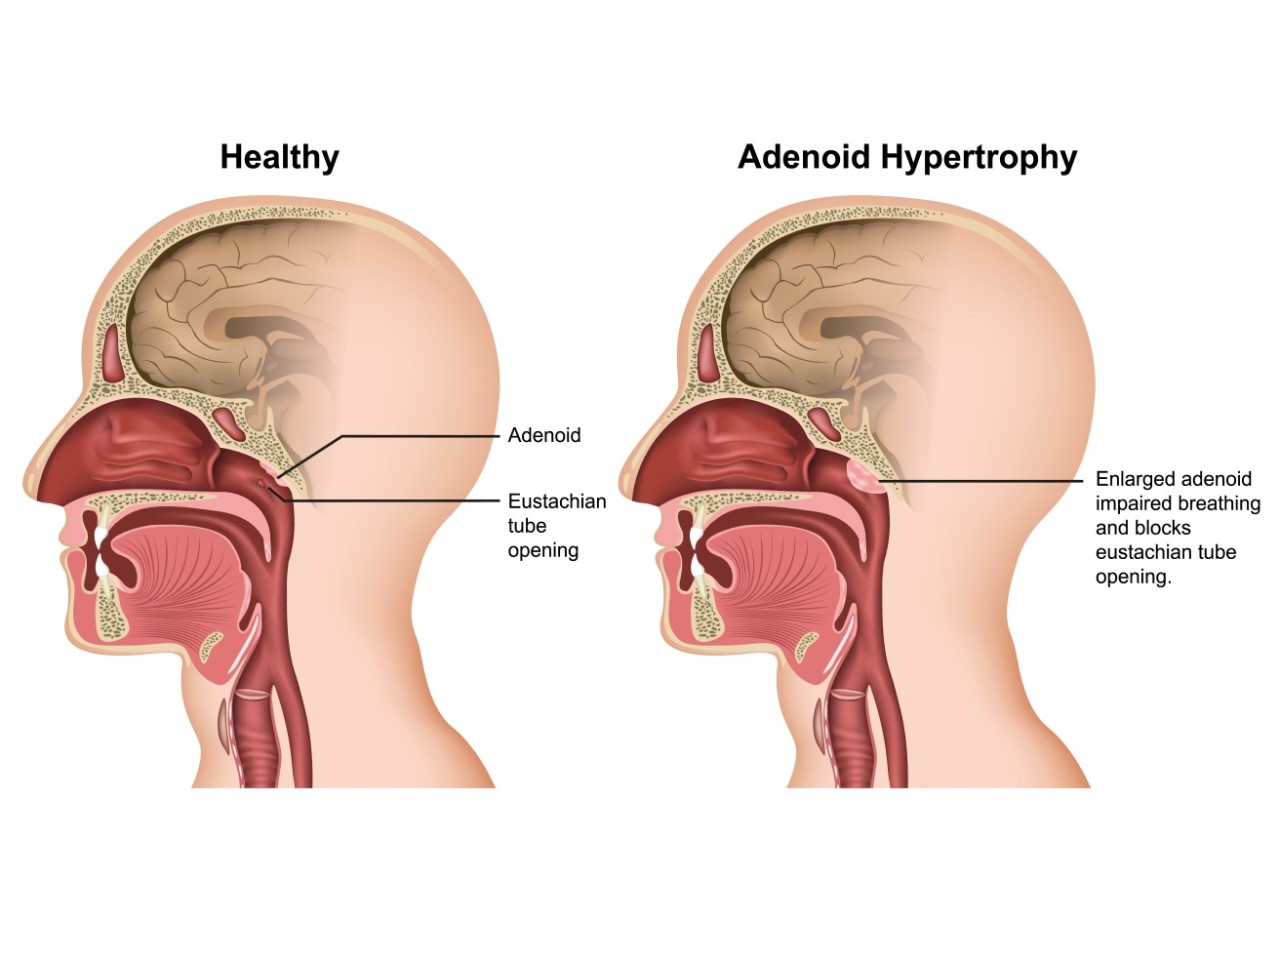 Adenoid Hypertrophy